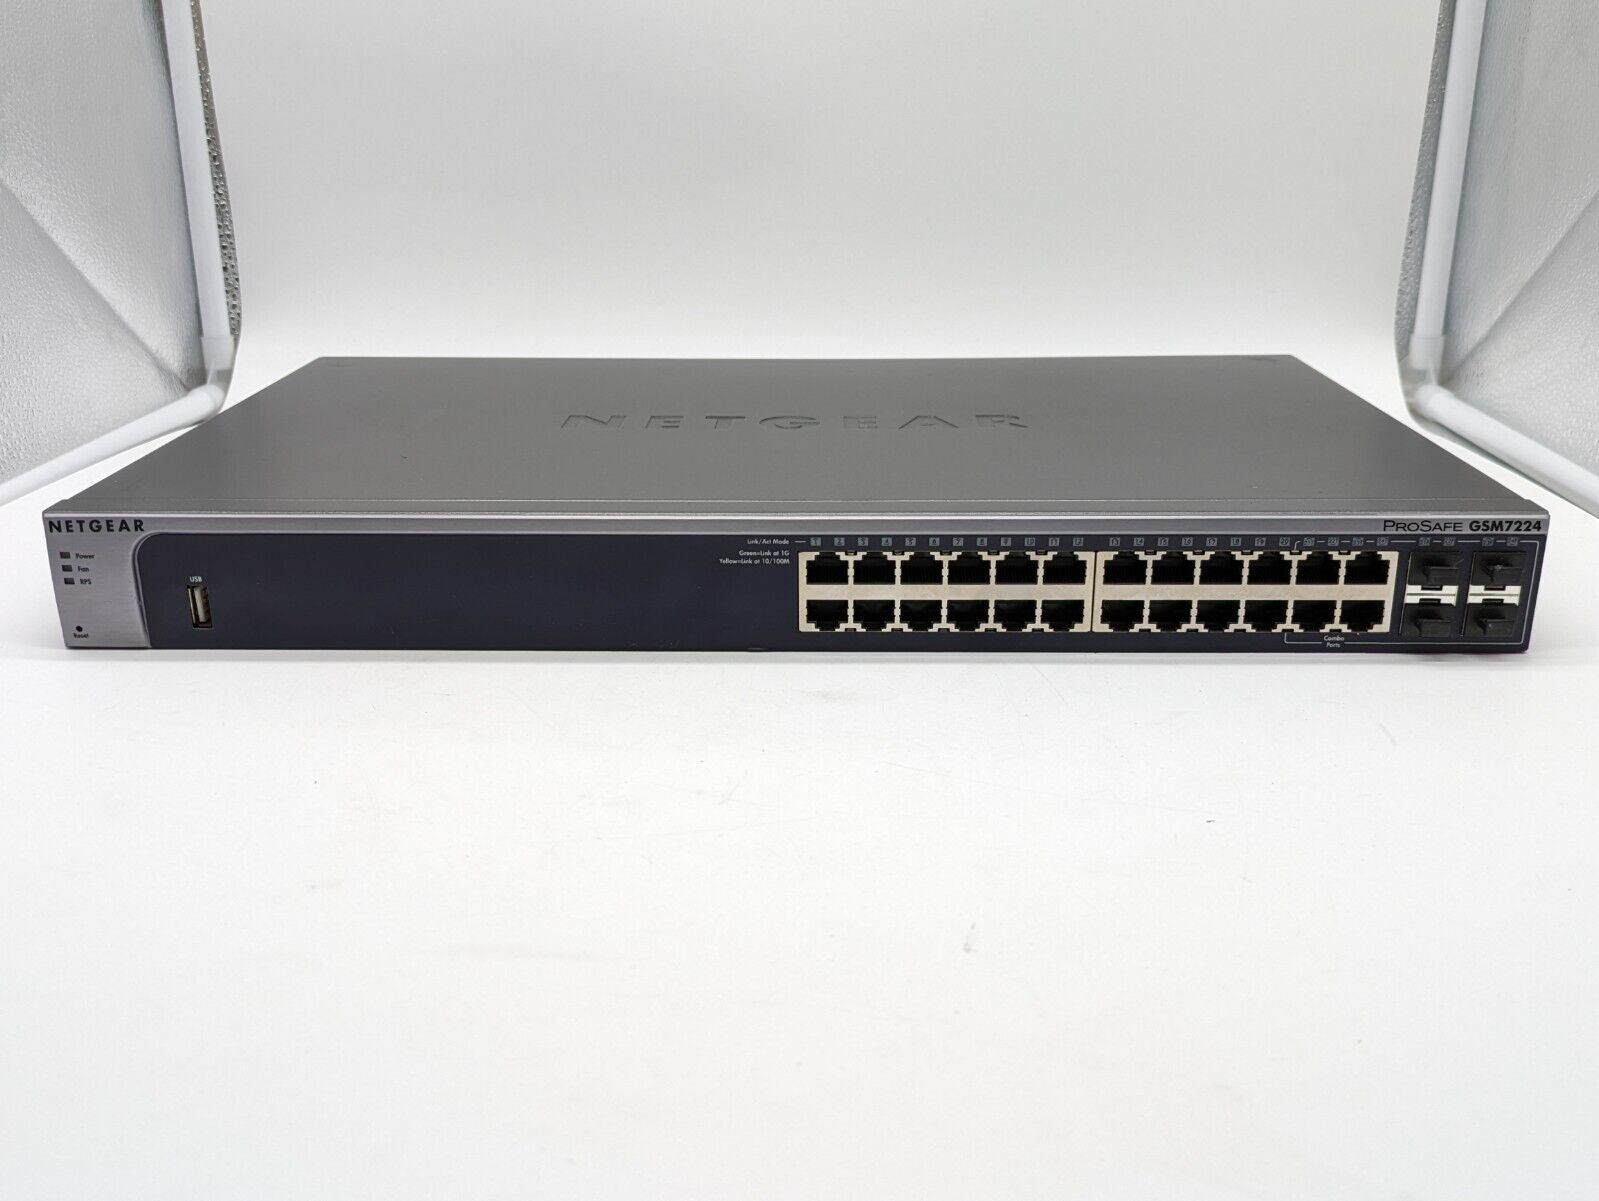 NetGear ProSafe 24 Port Gigabit Ethernet L2 Managed Switch GSM7224 w/ Power Cord